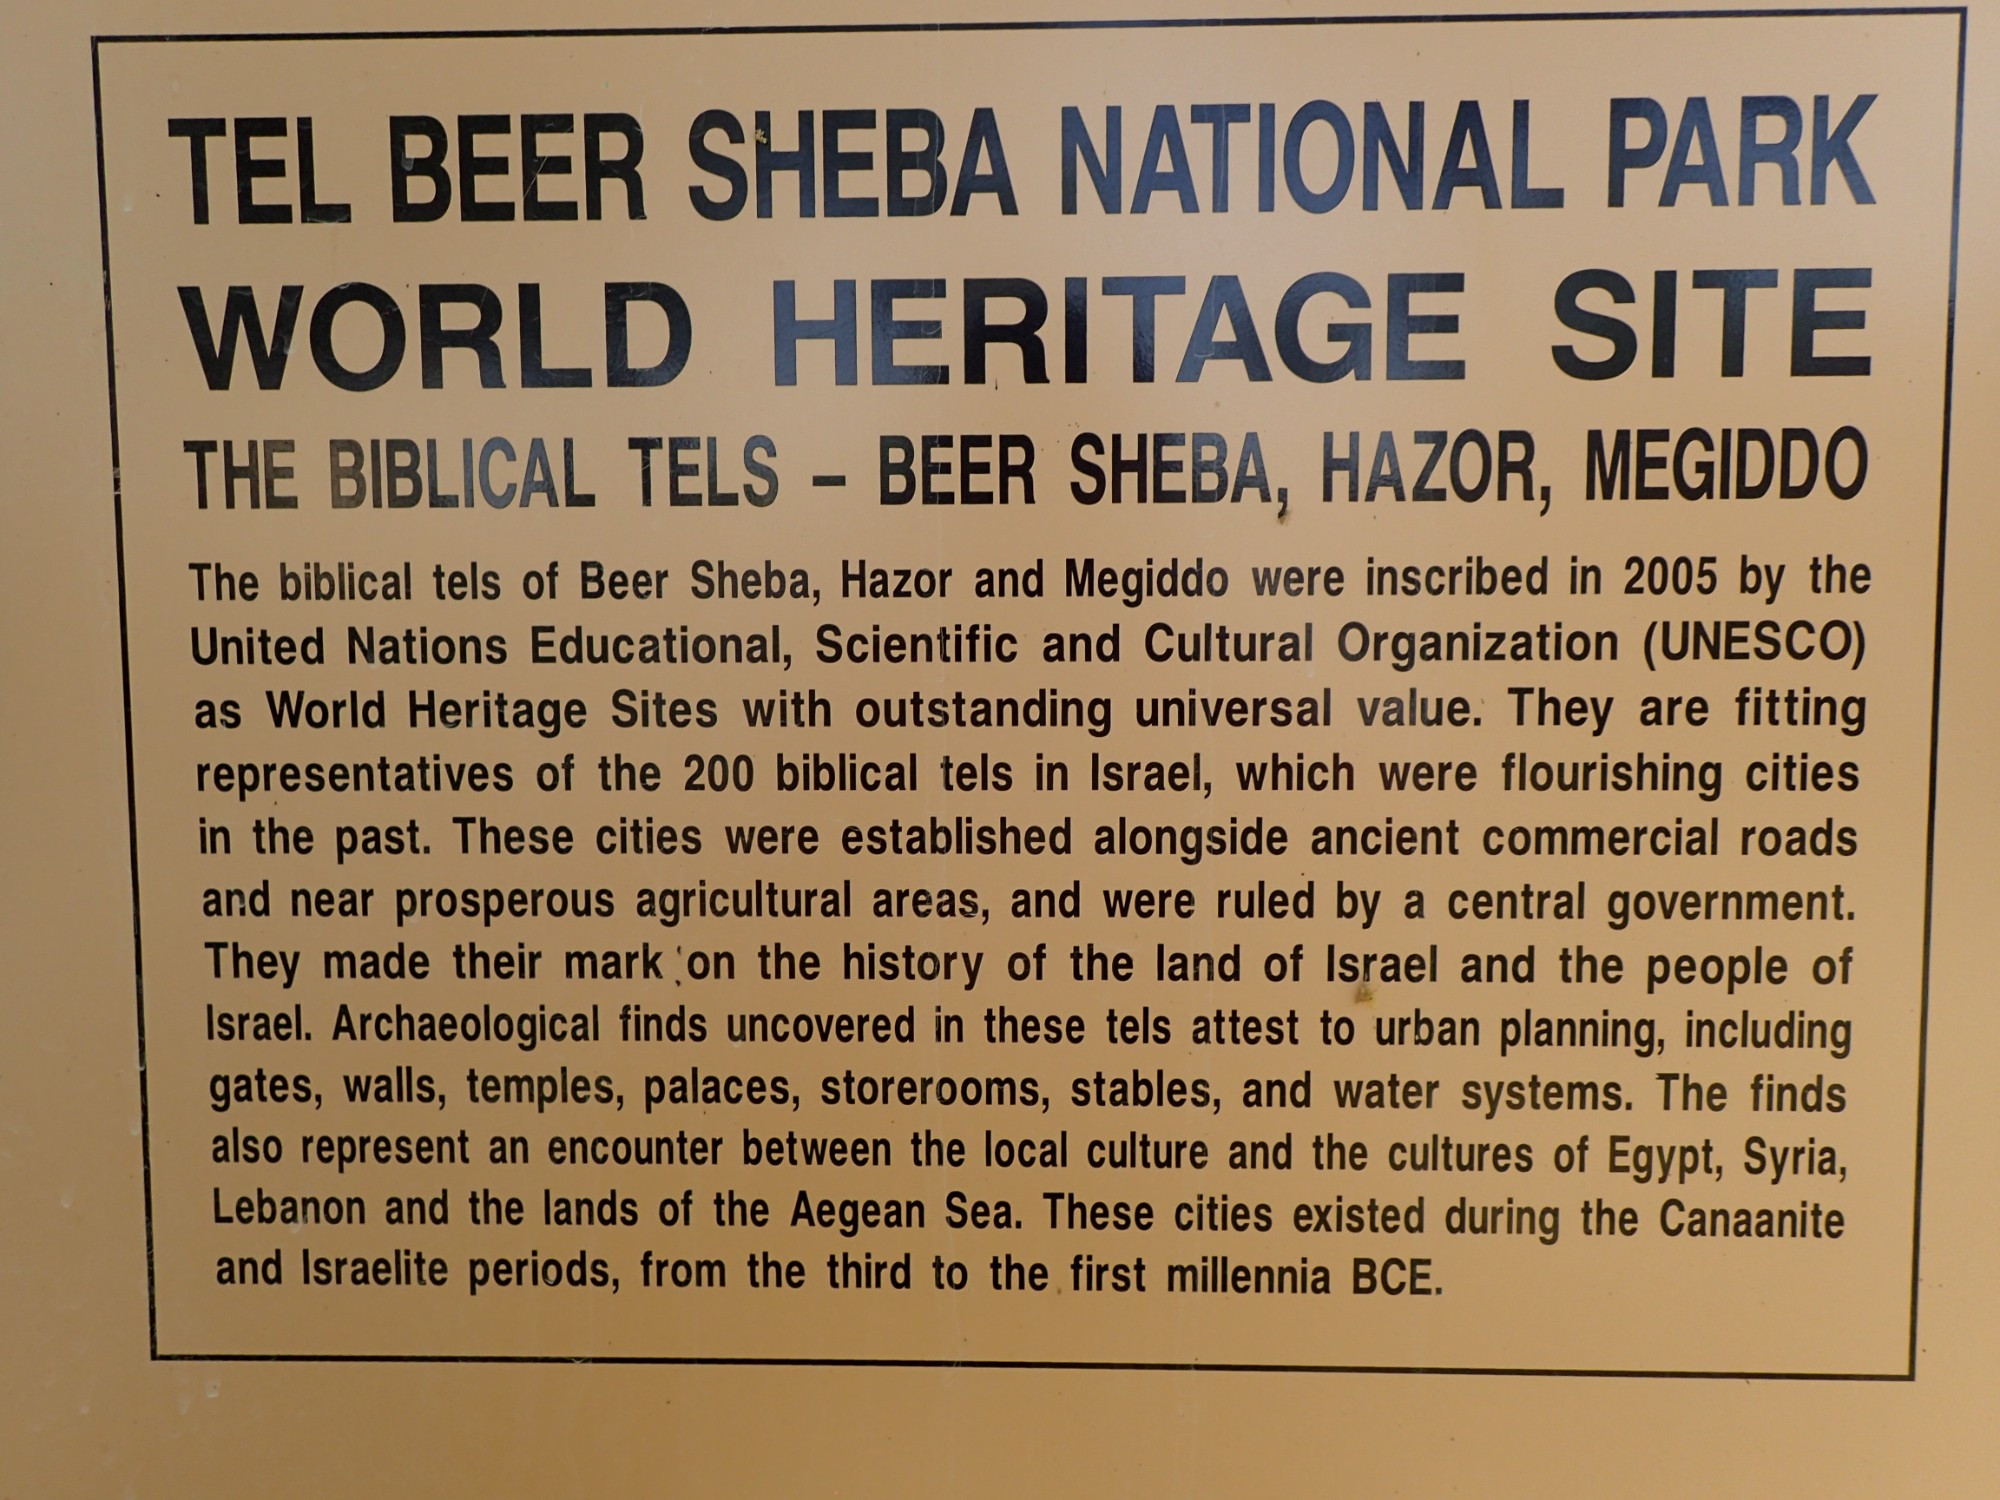 Tel Beer Sheva National Park, Israel